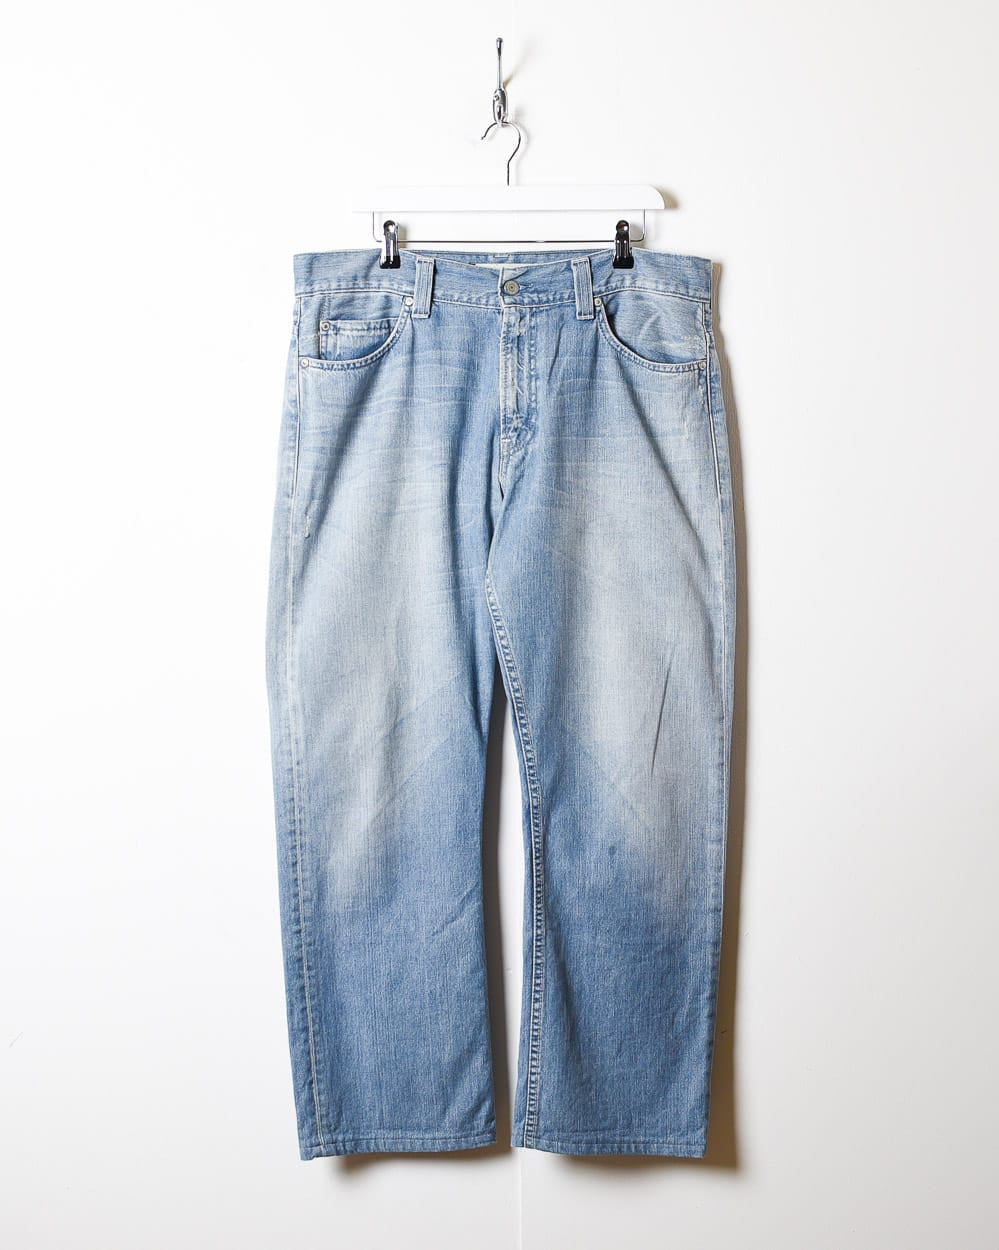 BabyBlue Levi's 506 Jeans - W38 L29